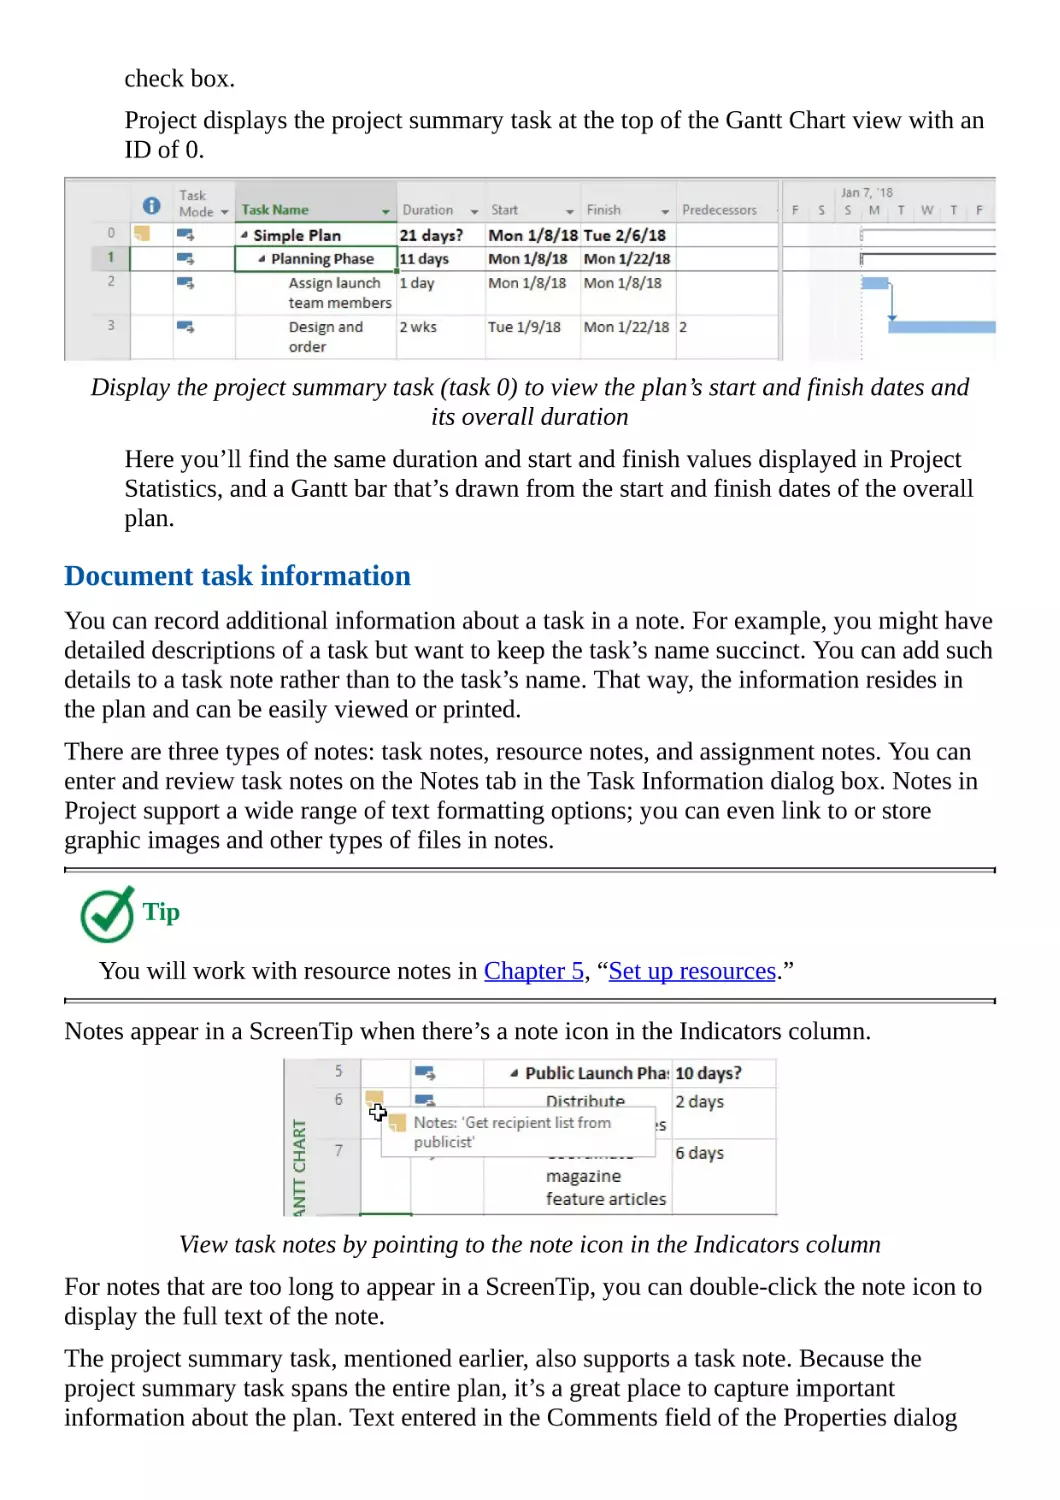 Document task information